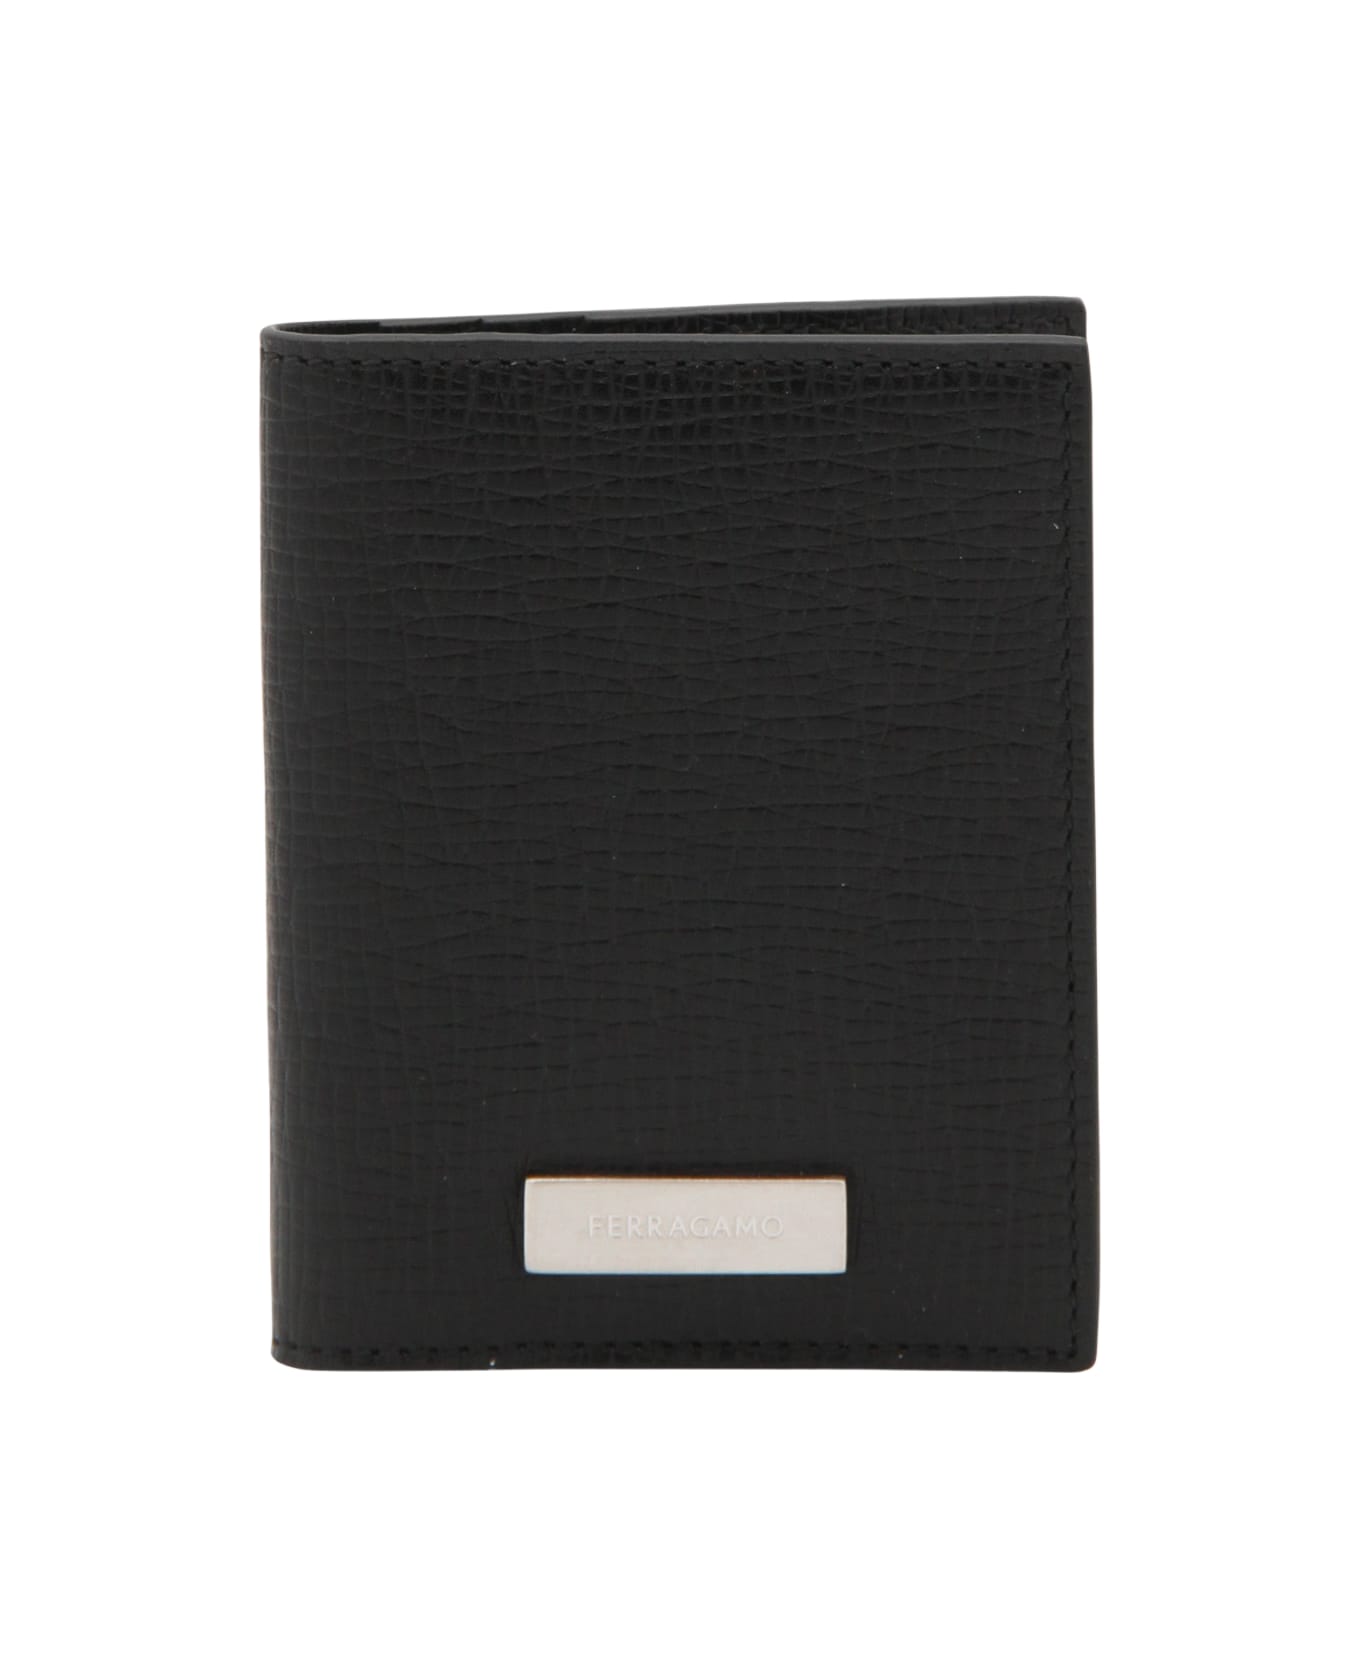 Ferragamo Black Leather Custom Metal Plate Card Holder - Black